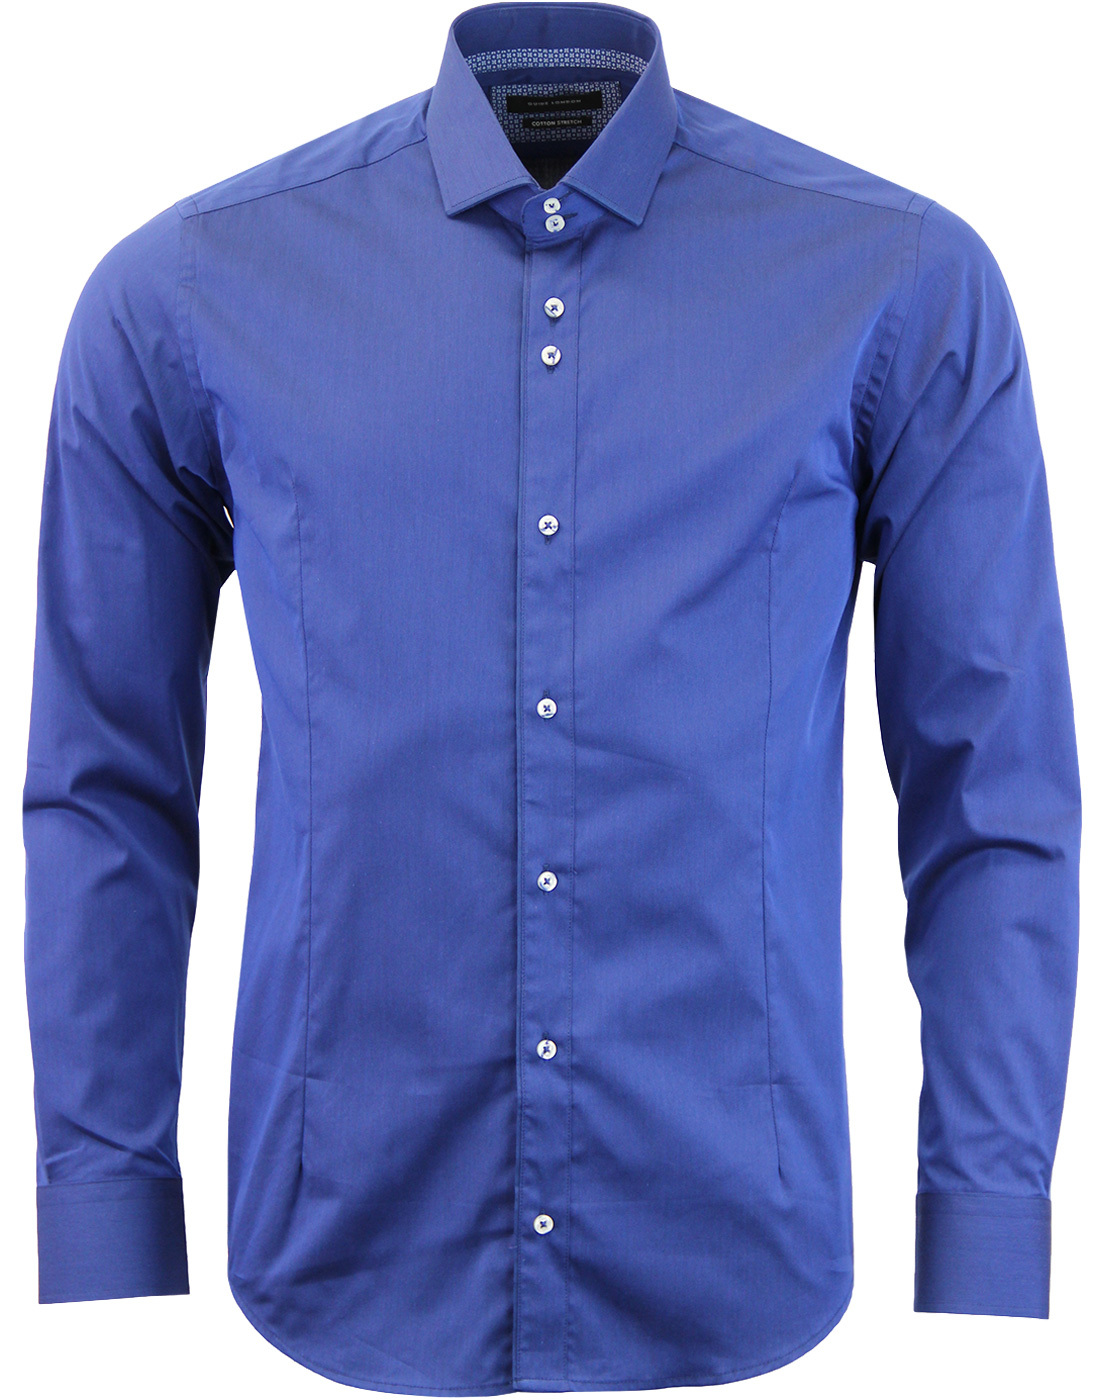 GUIDE LONDON Men's Retro Mod Spread Collar Tonic Shirt Blue